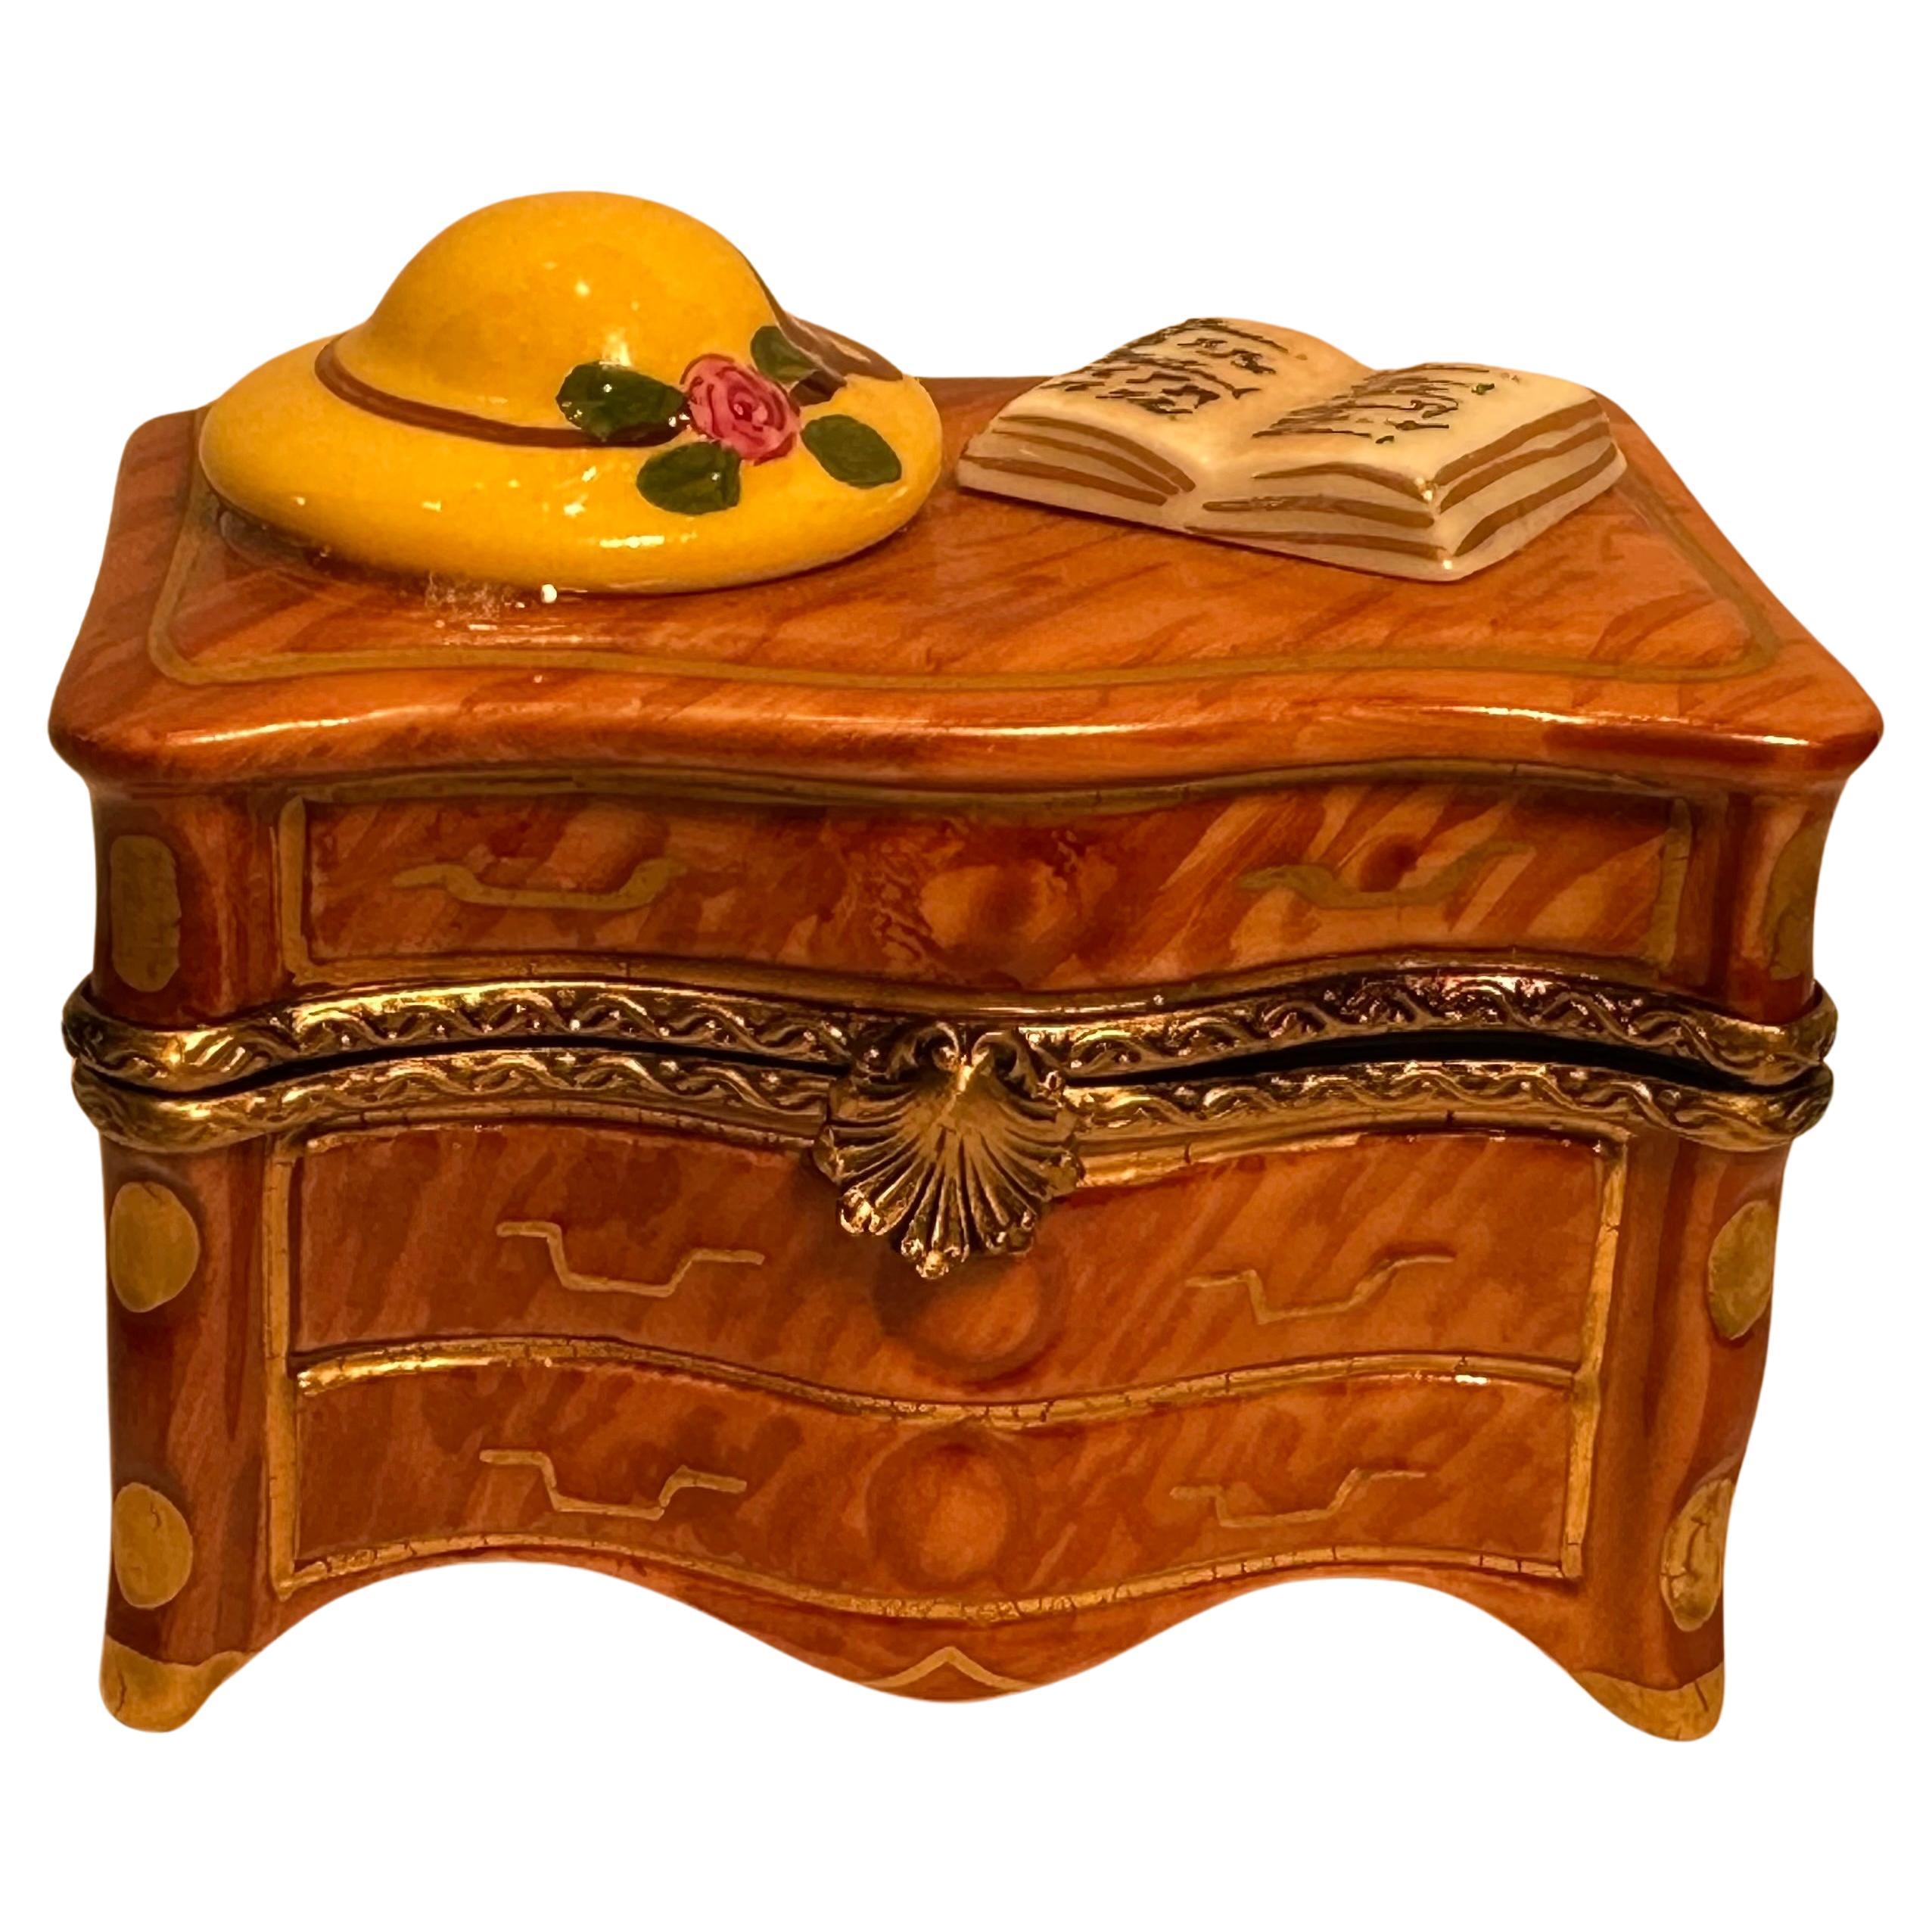 Limoges France Hand Painted Dresser With Hat & Music Book Porcelain Trinket Box